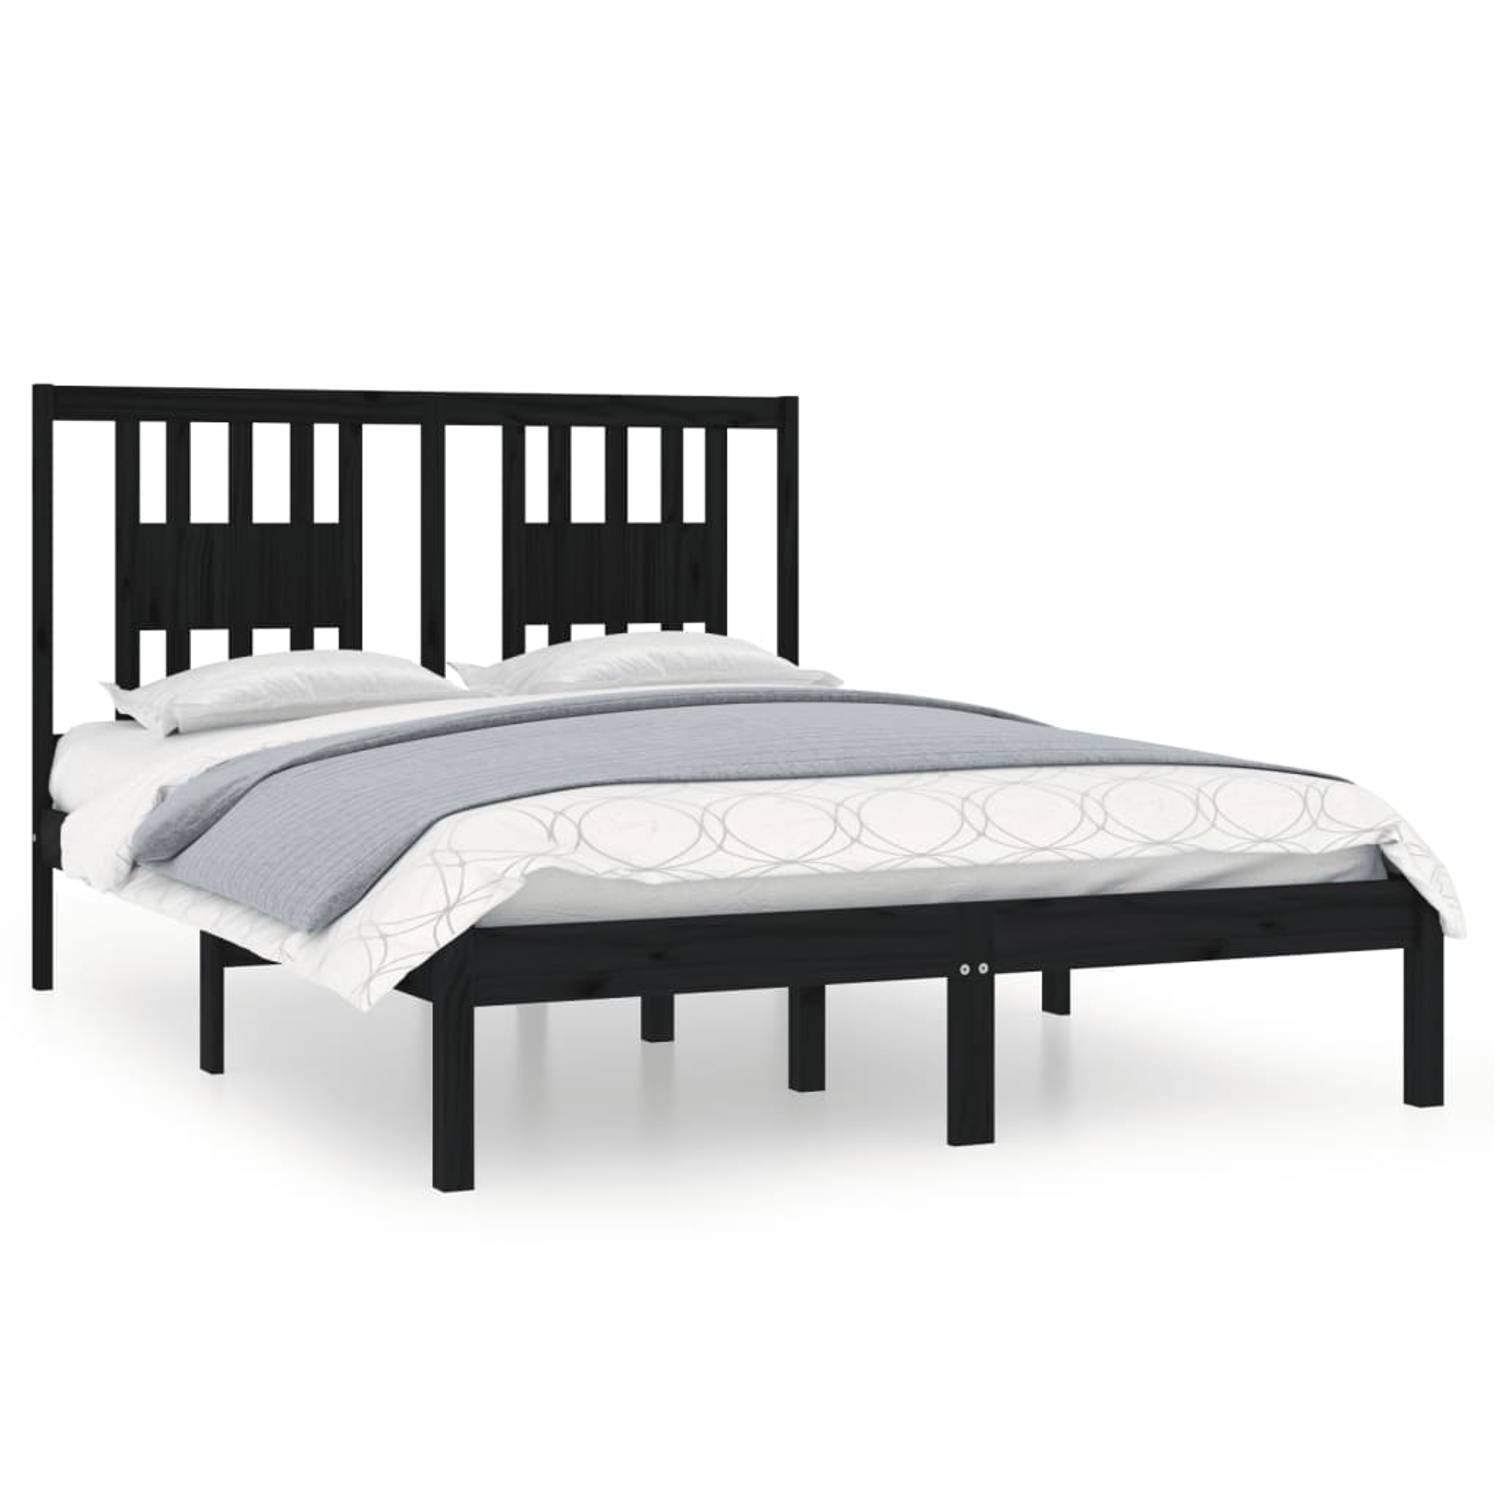 The Living Store Bedframe massief hout zwart 135x190 cm 4FT6 Double - Bedframe - Bedframes - Tweepersoonsbed - Bed - Bedombouw - Dubbel Bed - Frame - Bed Frame - Ledikant - Houten